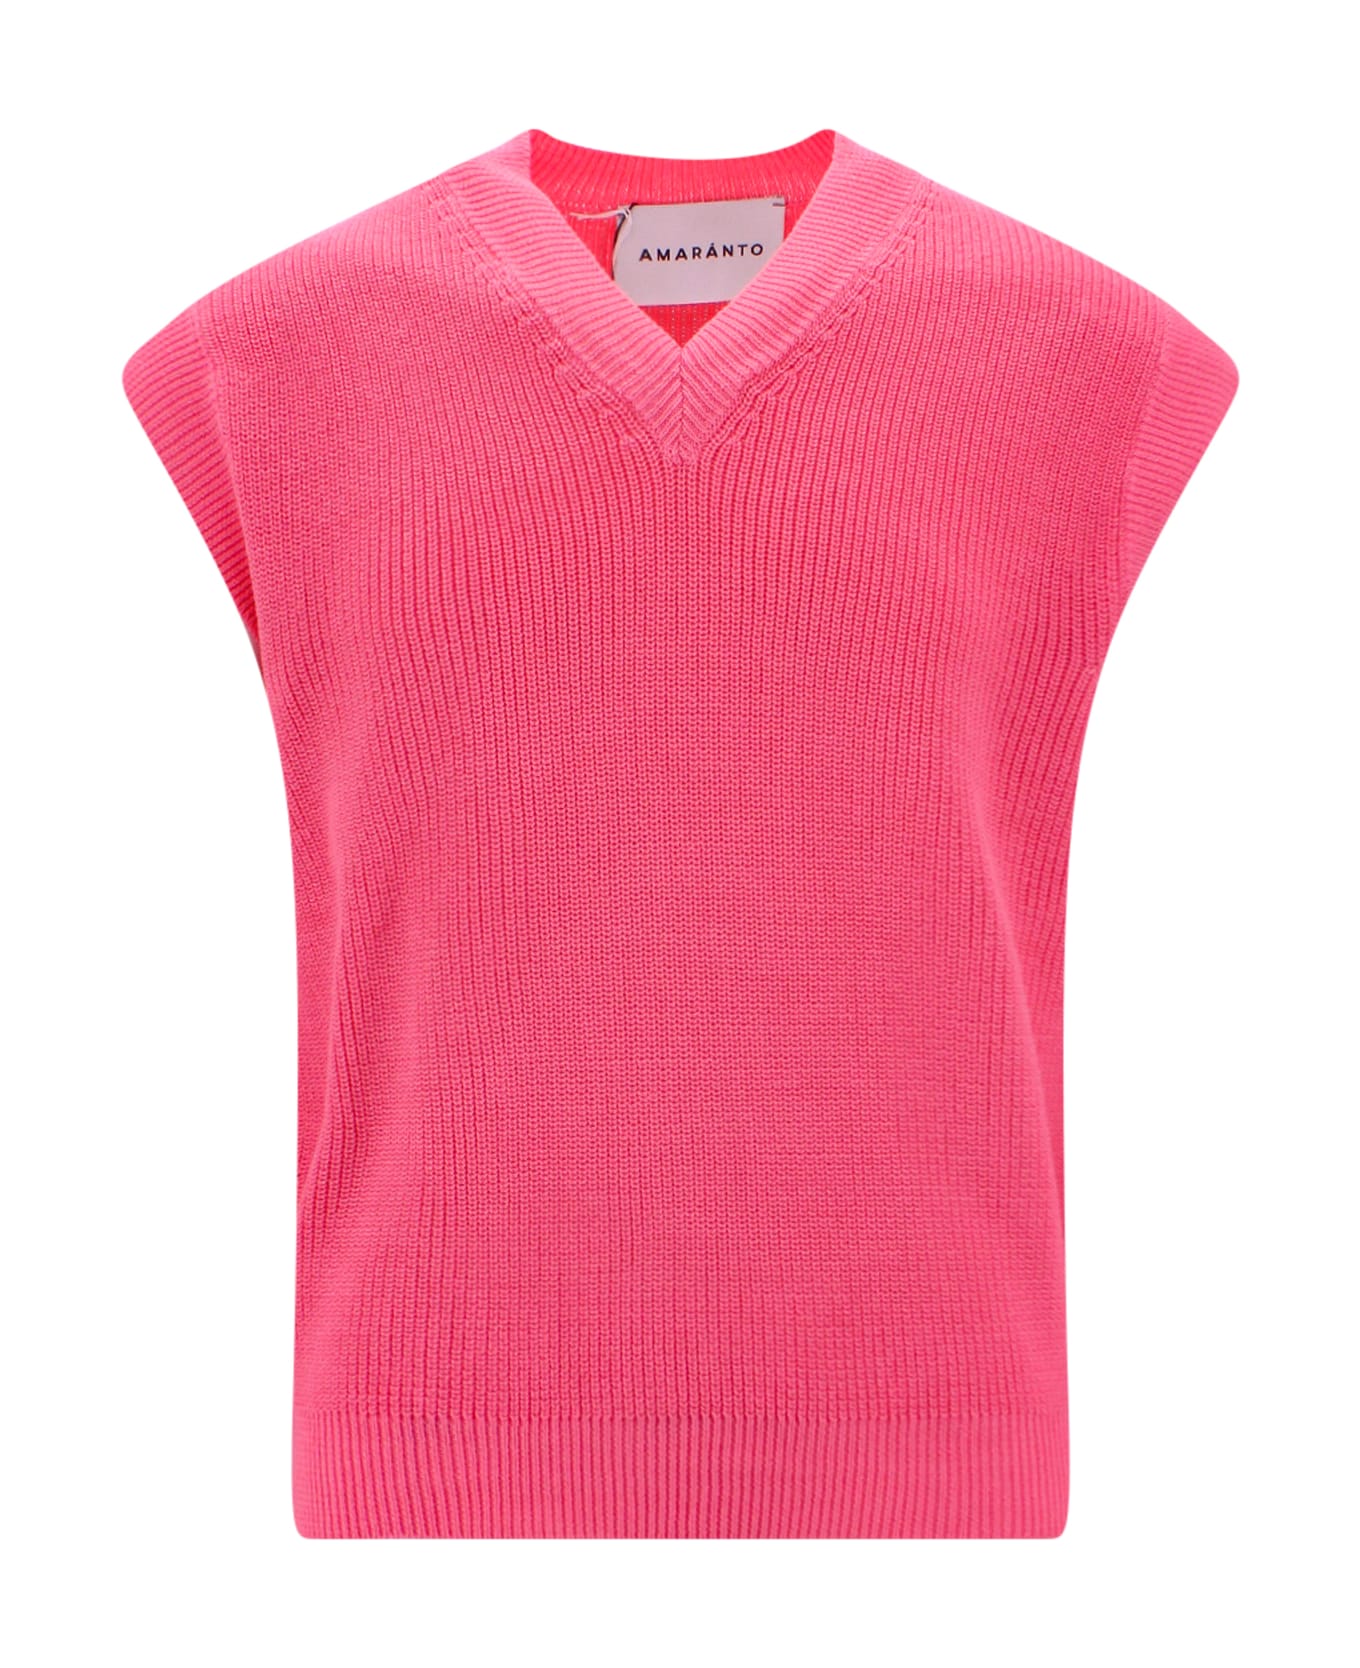 Amaranto Vest - Pink